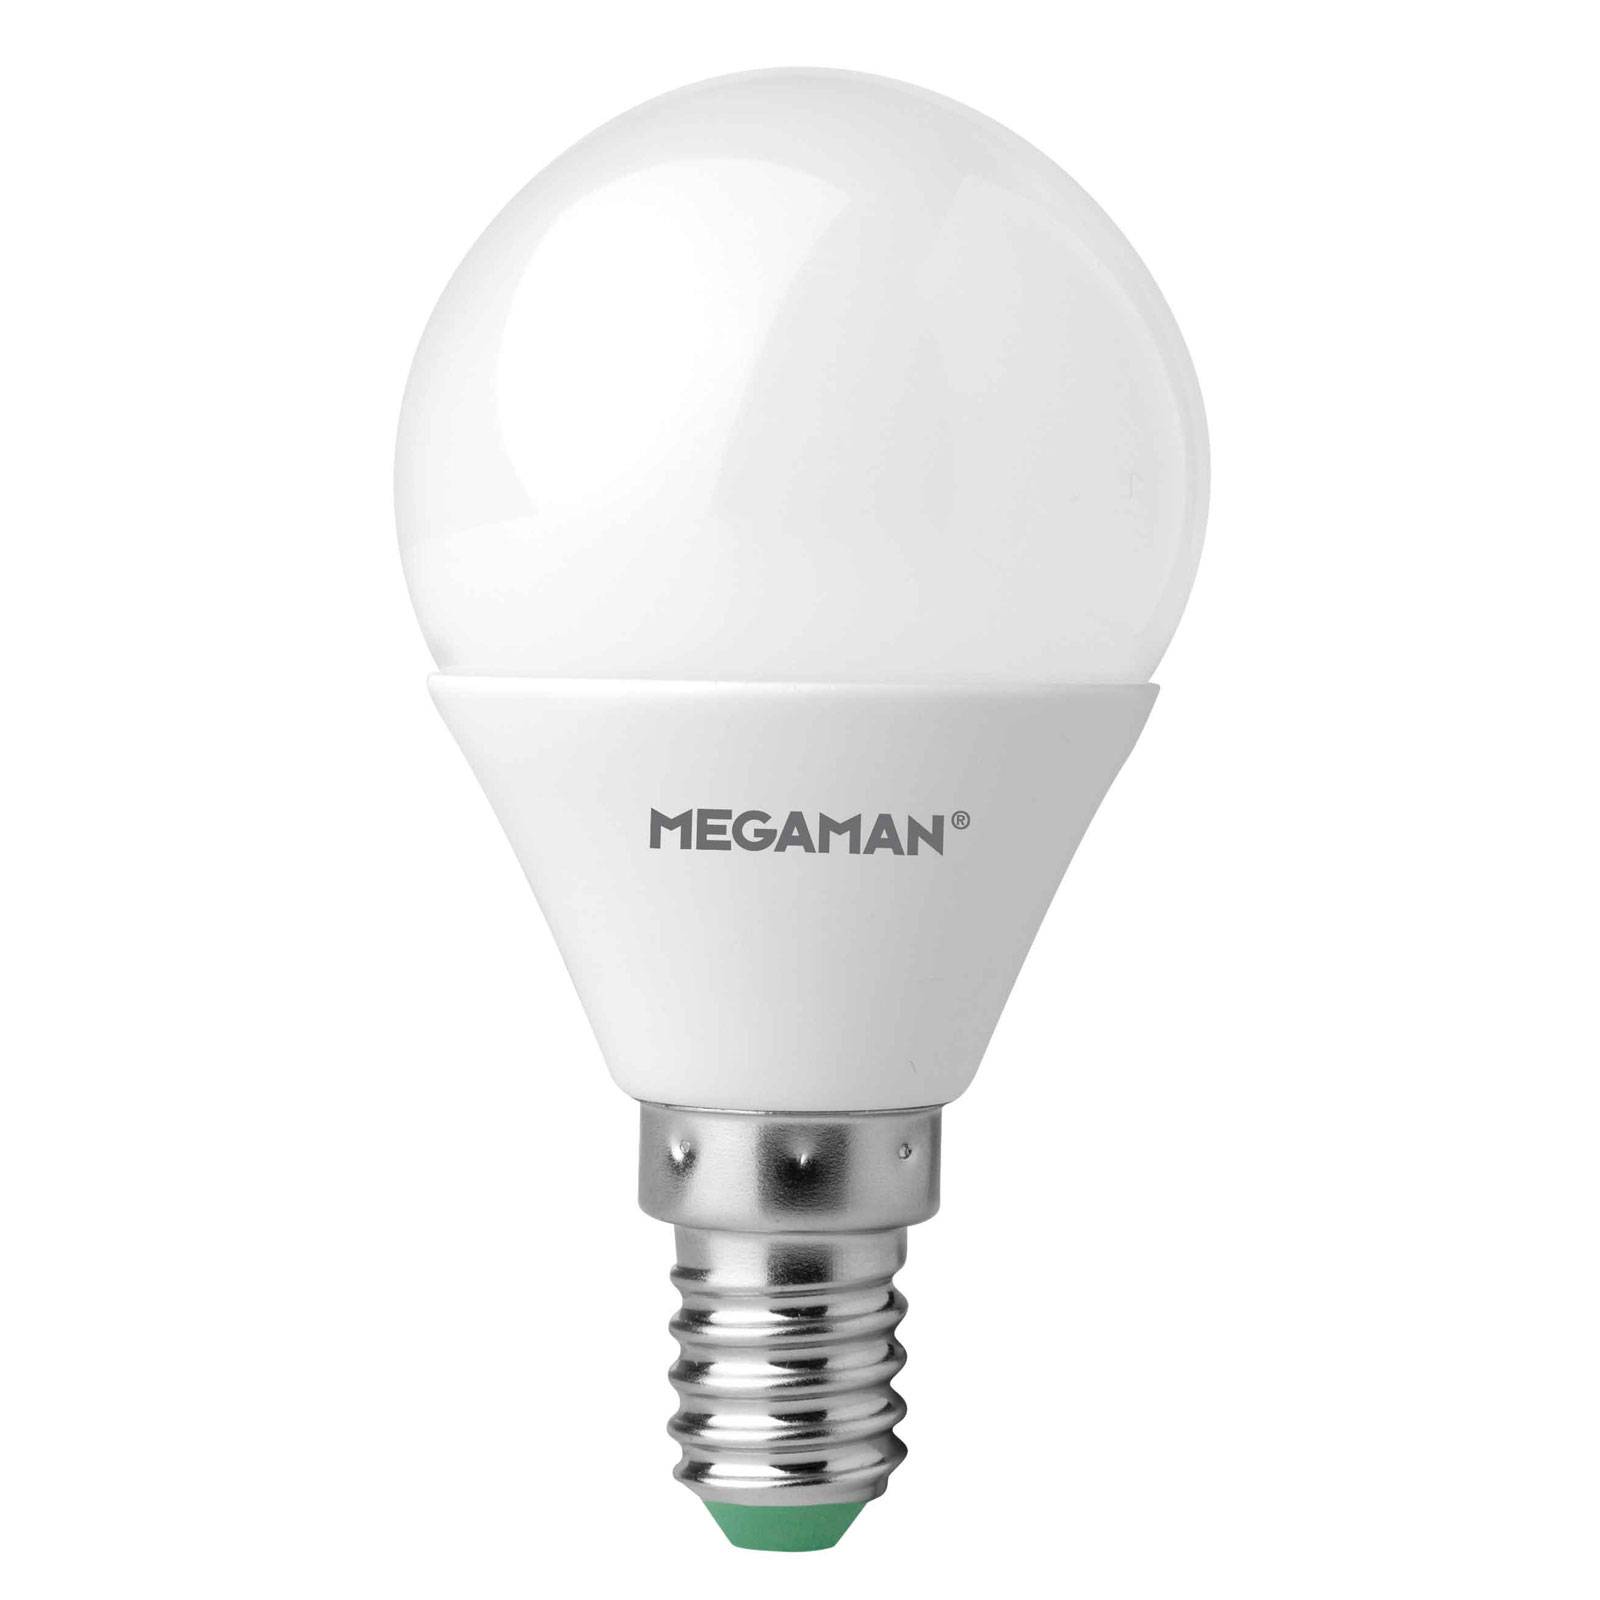 Megaman LED-Lampe E14 Tropfen 3,5W, warmweiß, dimmbar